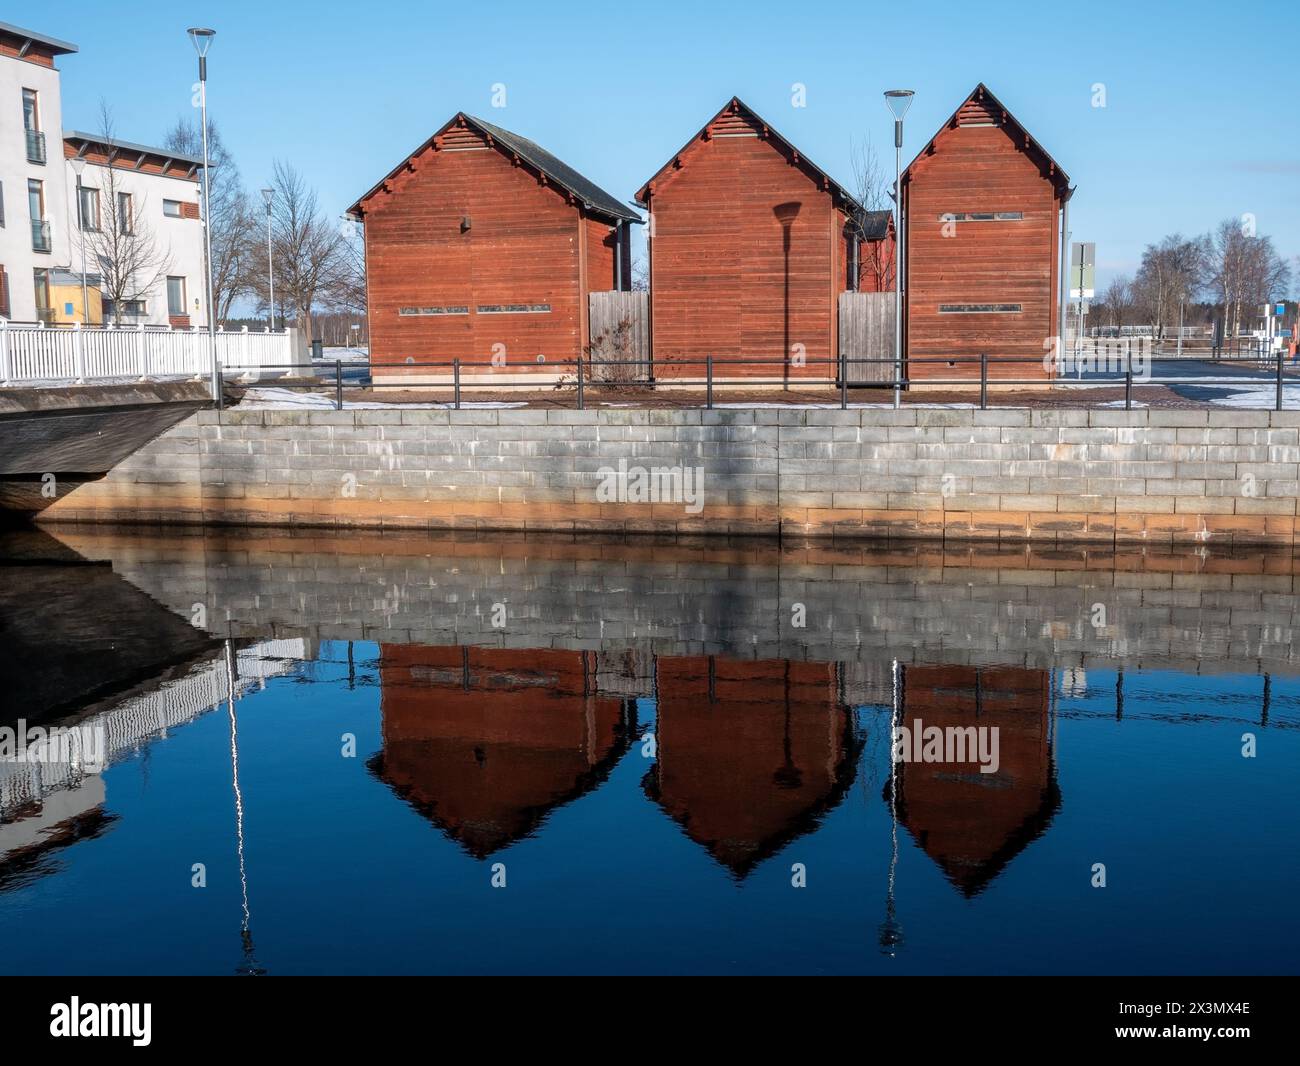 Old wooden red barns in Kiikeli, Oulu Finland Stock Photo